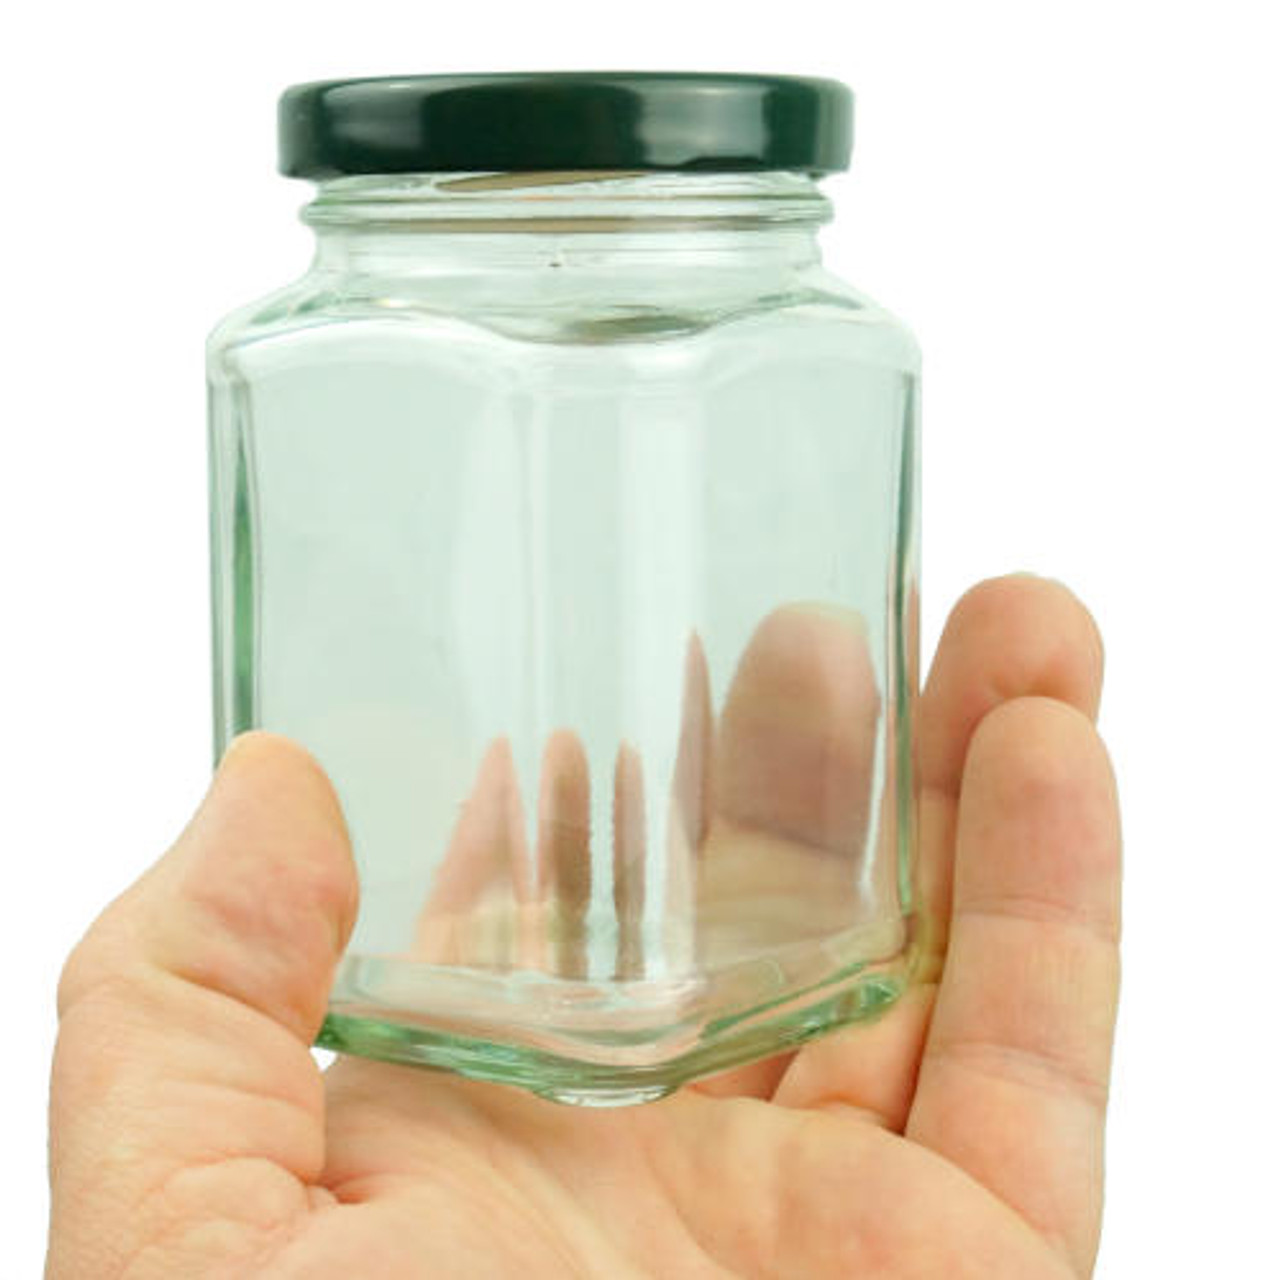 LITTLE CLEAR GLASS JARS 1 OUNCE PKG(4)